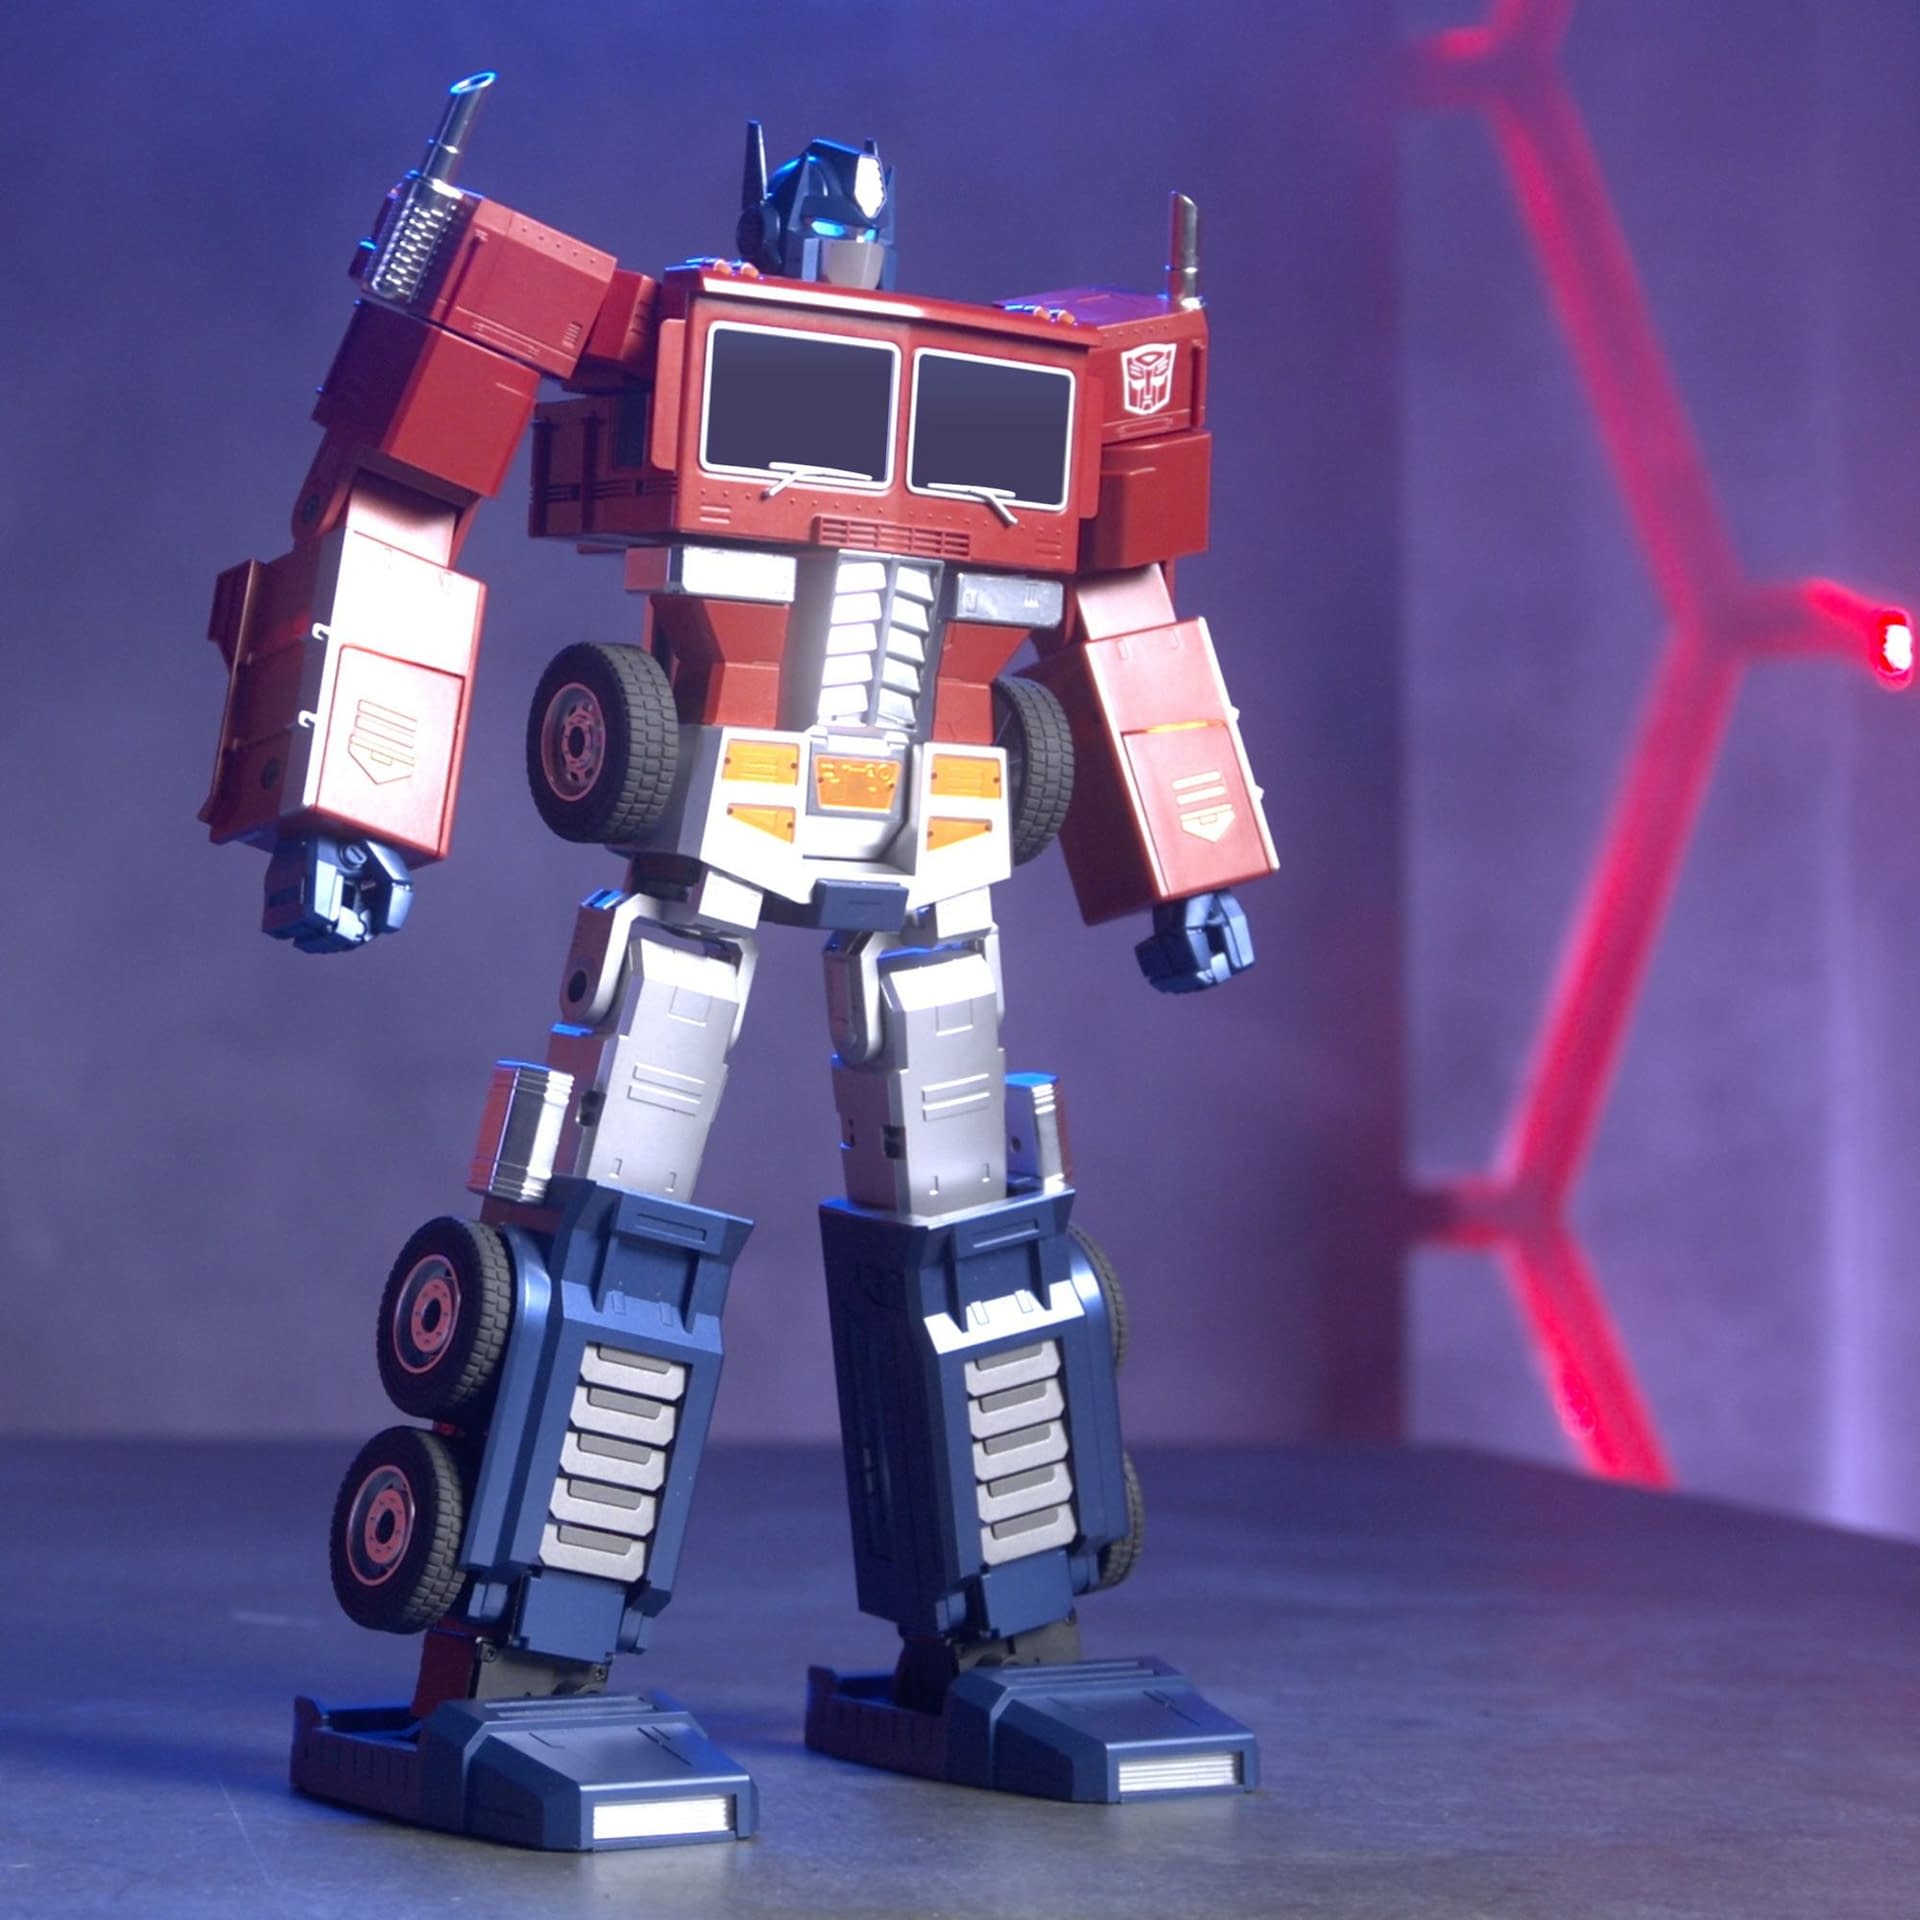 Transformers Optimus Prime Returns to Roboson with Elite Edition Bot